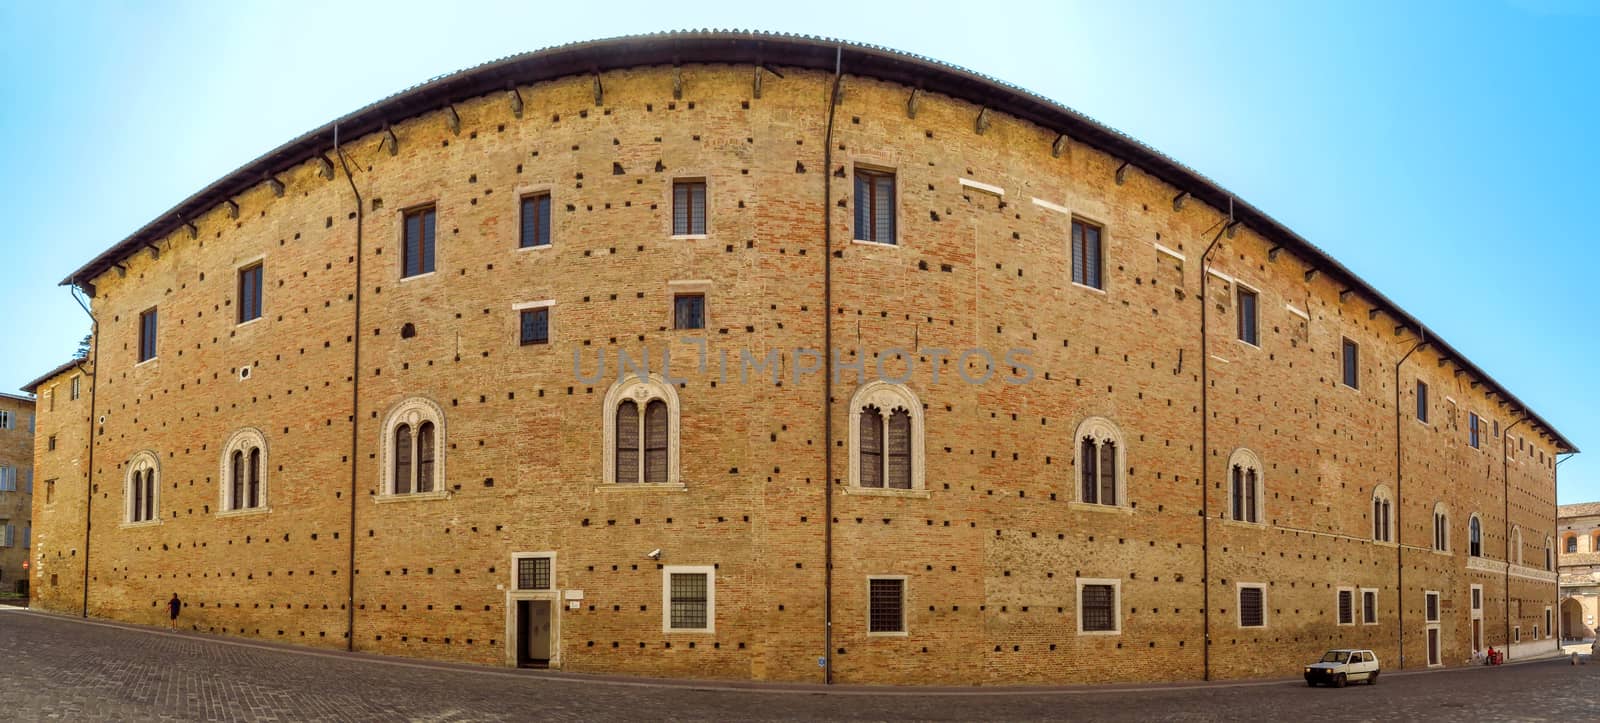 Urbino, Italy - June 24, 2017: Architecture old city in Urbino, Italy